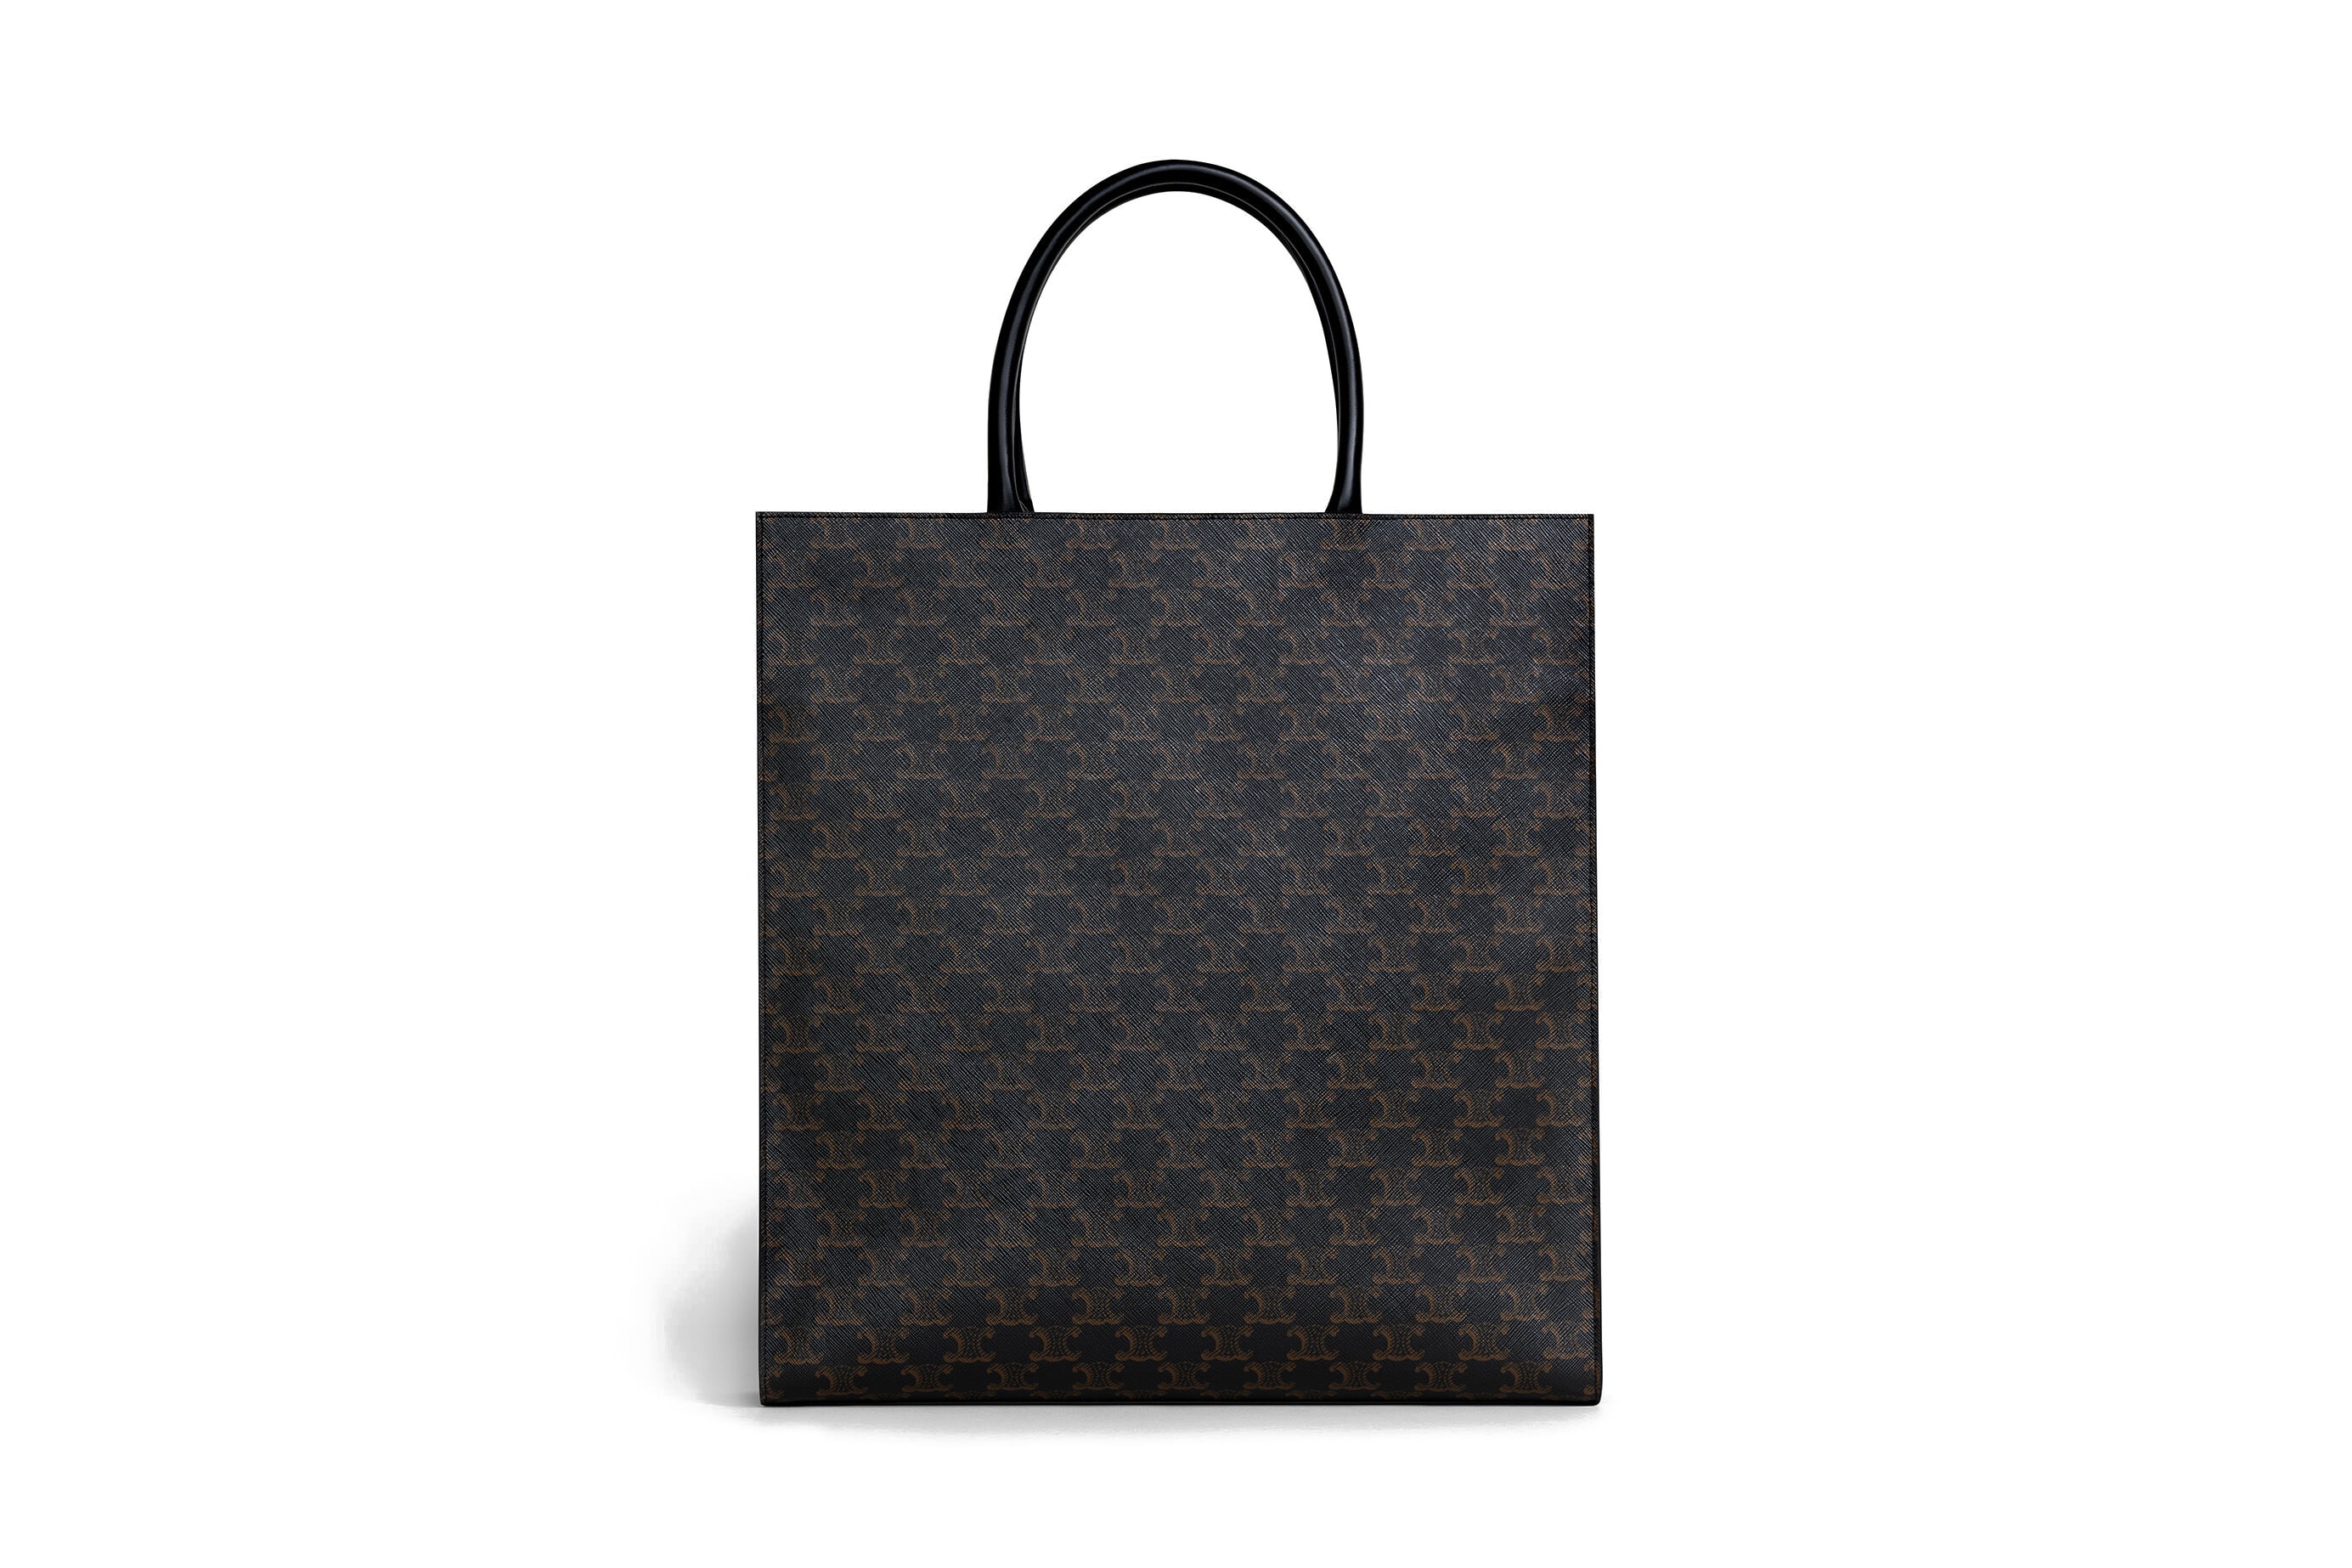 CELINE Logo Carry Bag Hedi Slimane Print Design Arc De Triomphe Inspired Heritage Fashion Luxury Accessory